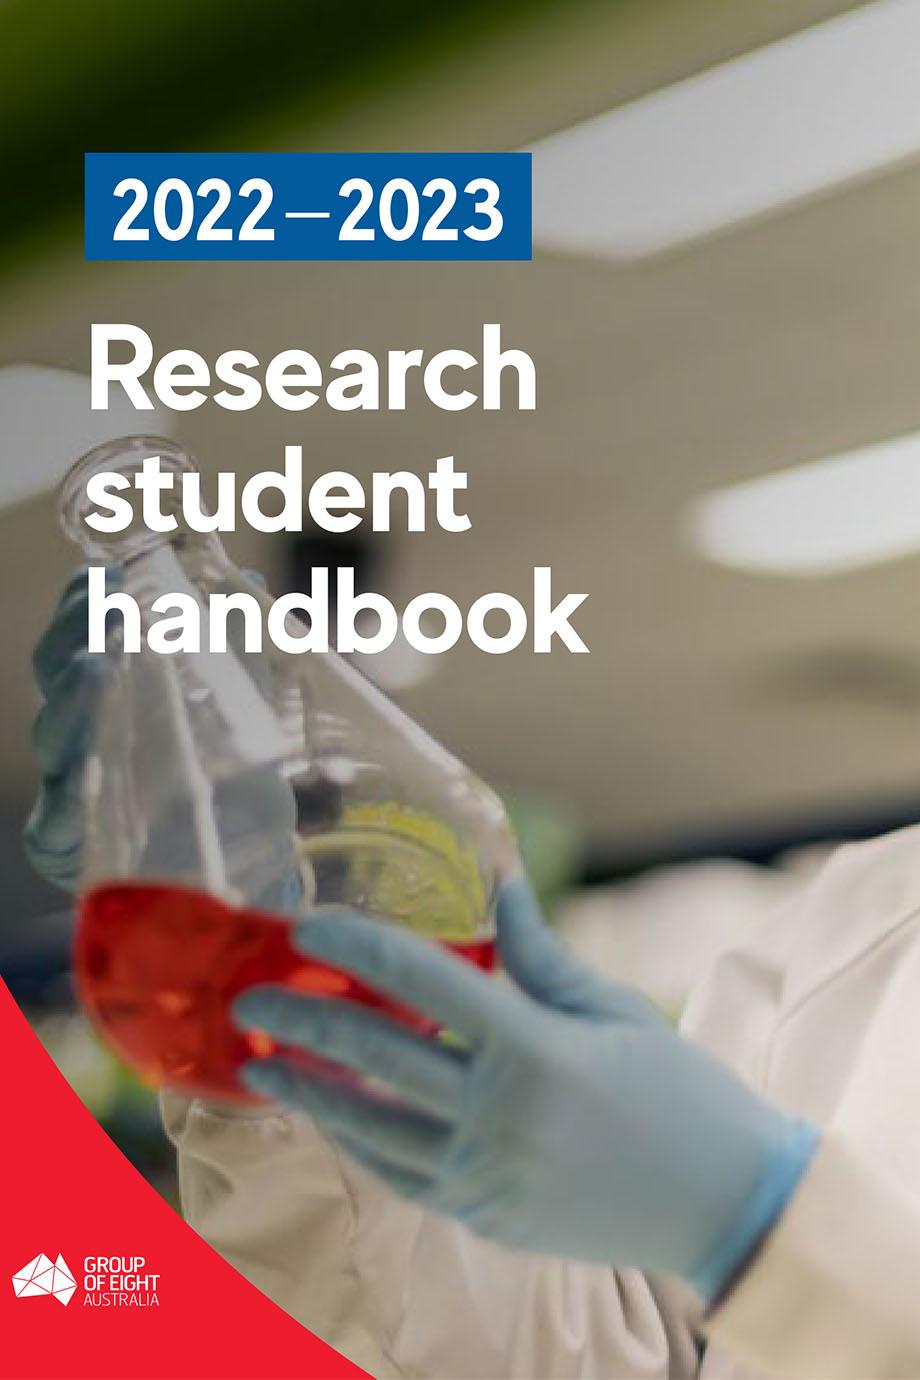 Research student handbook 2022 - 2023